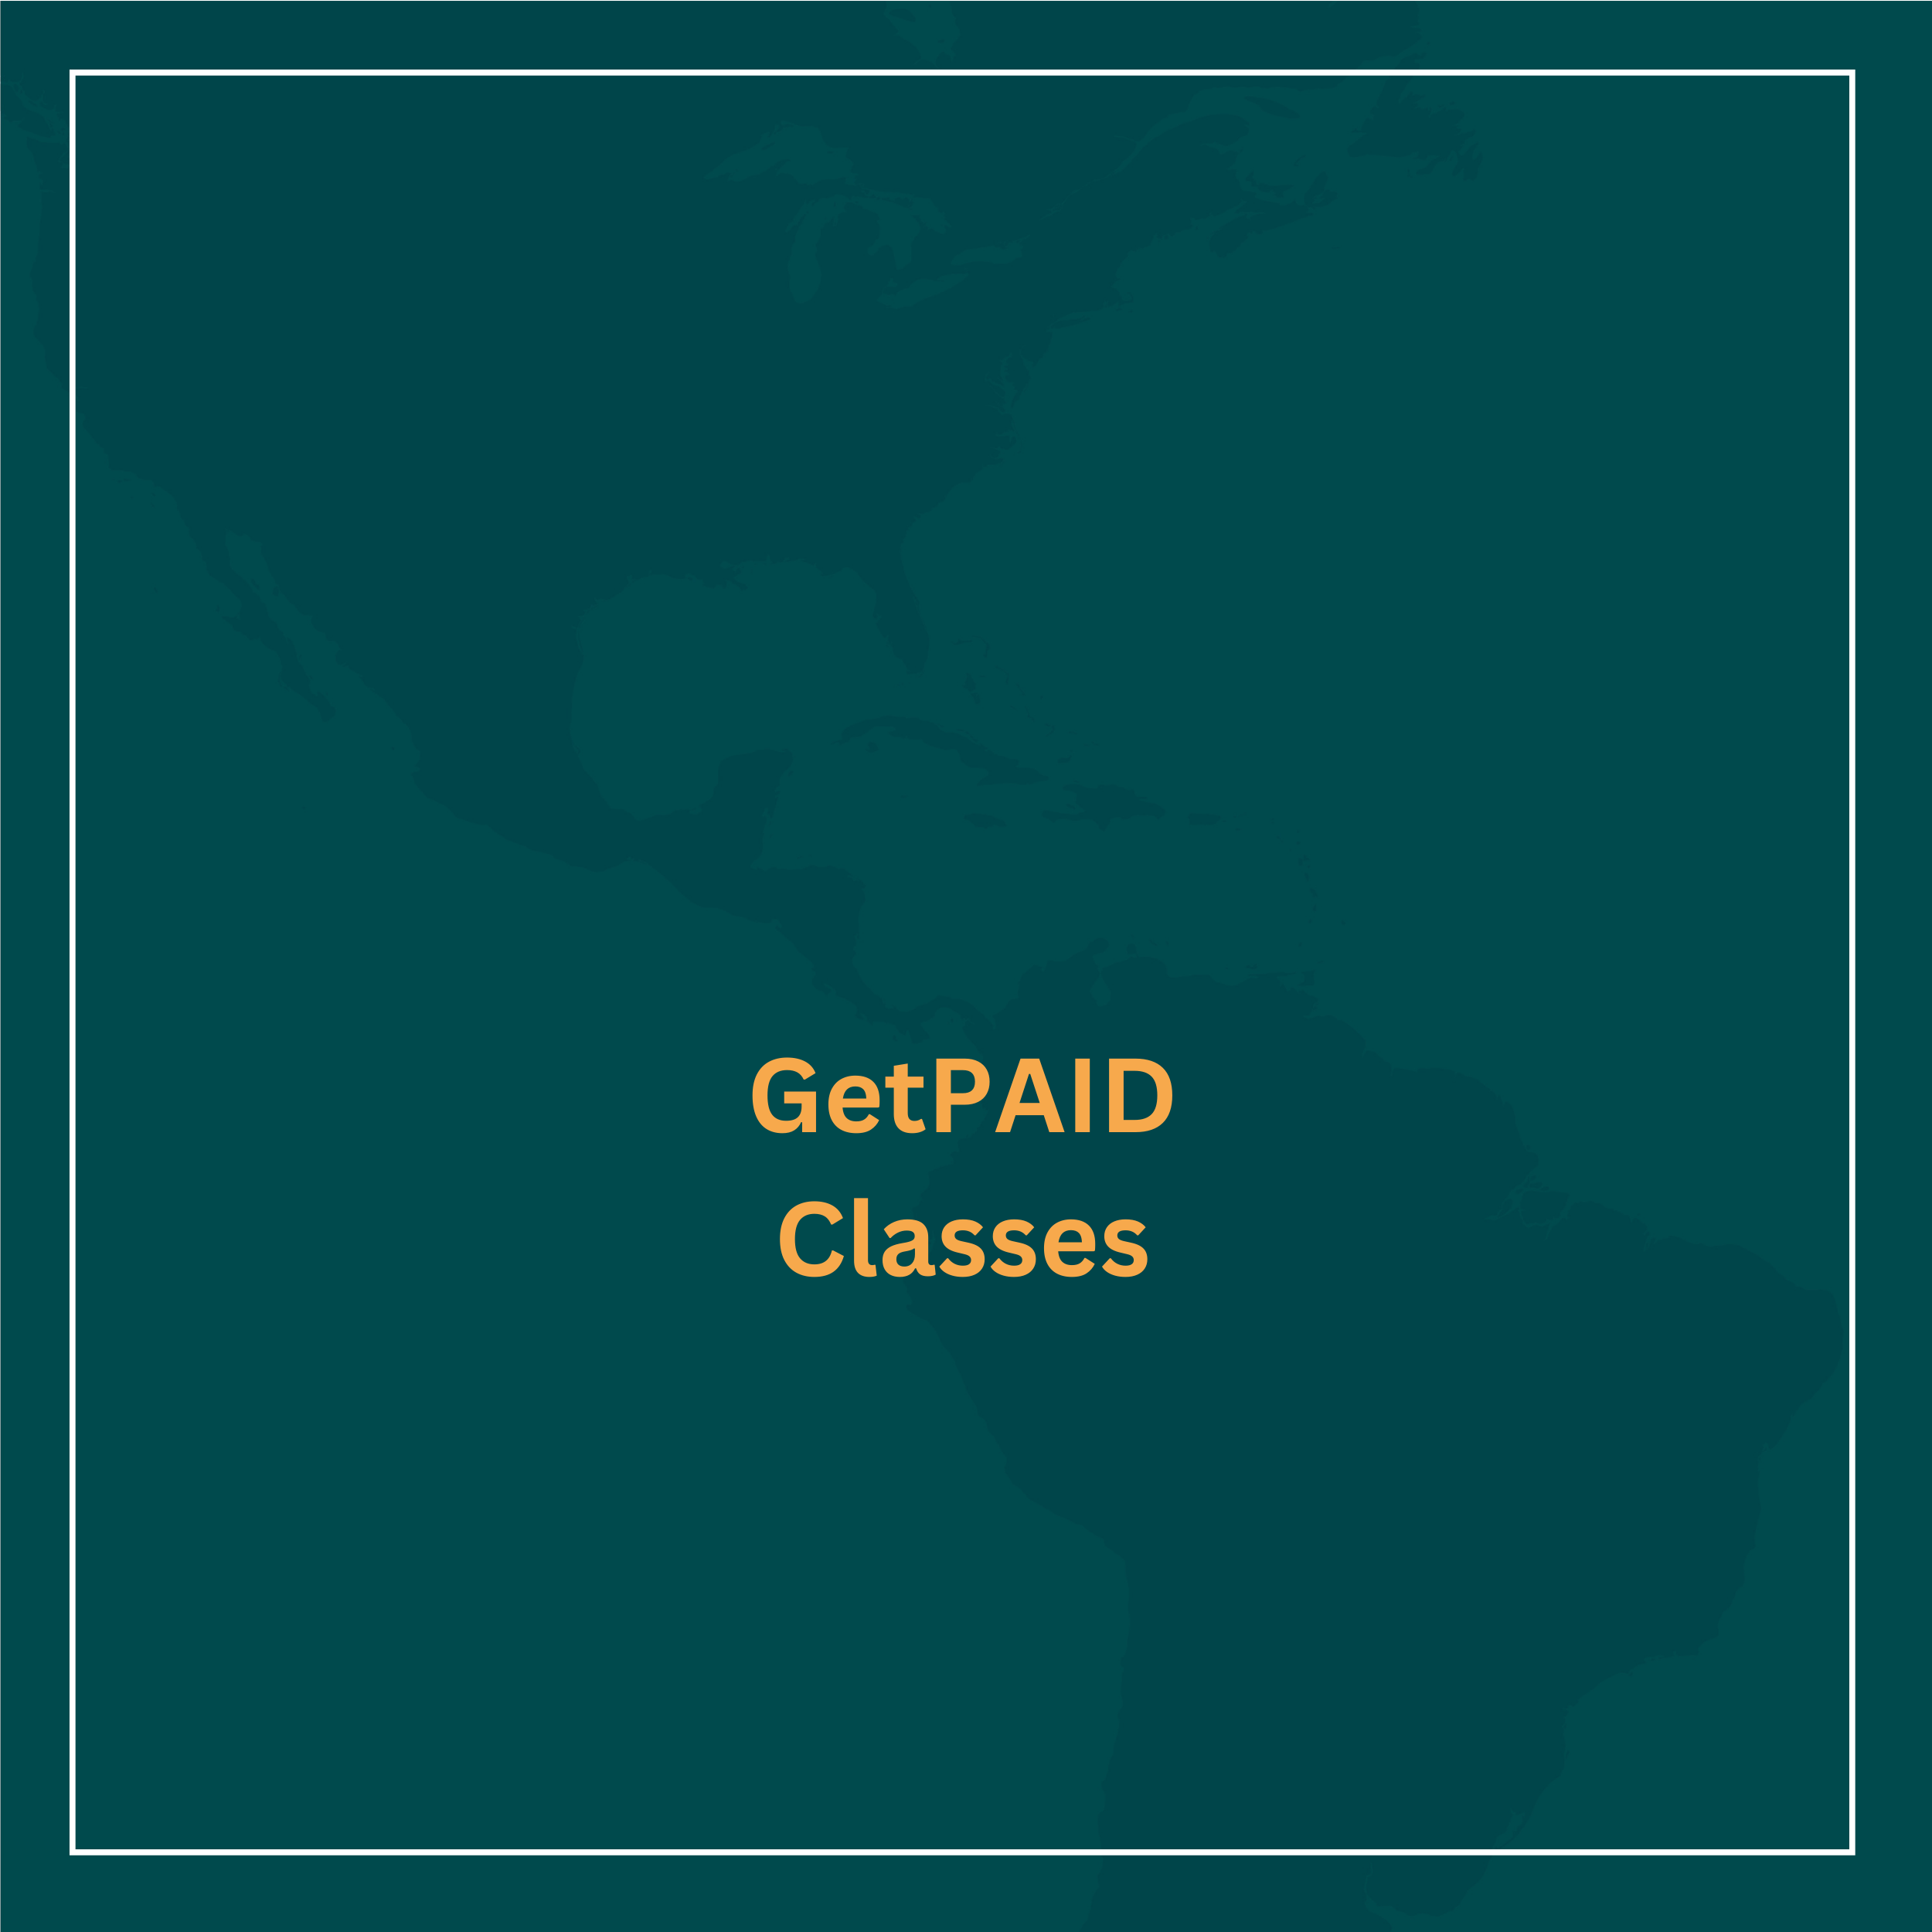 GetPAID Classes